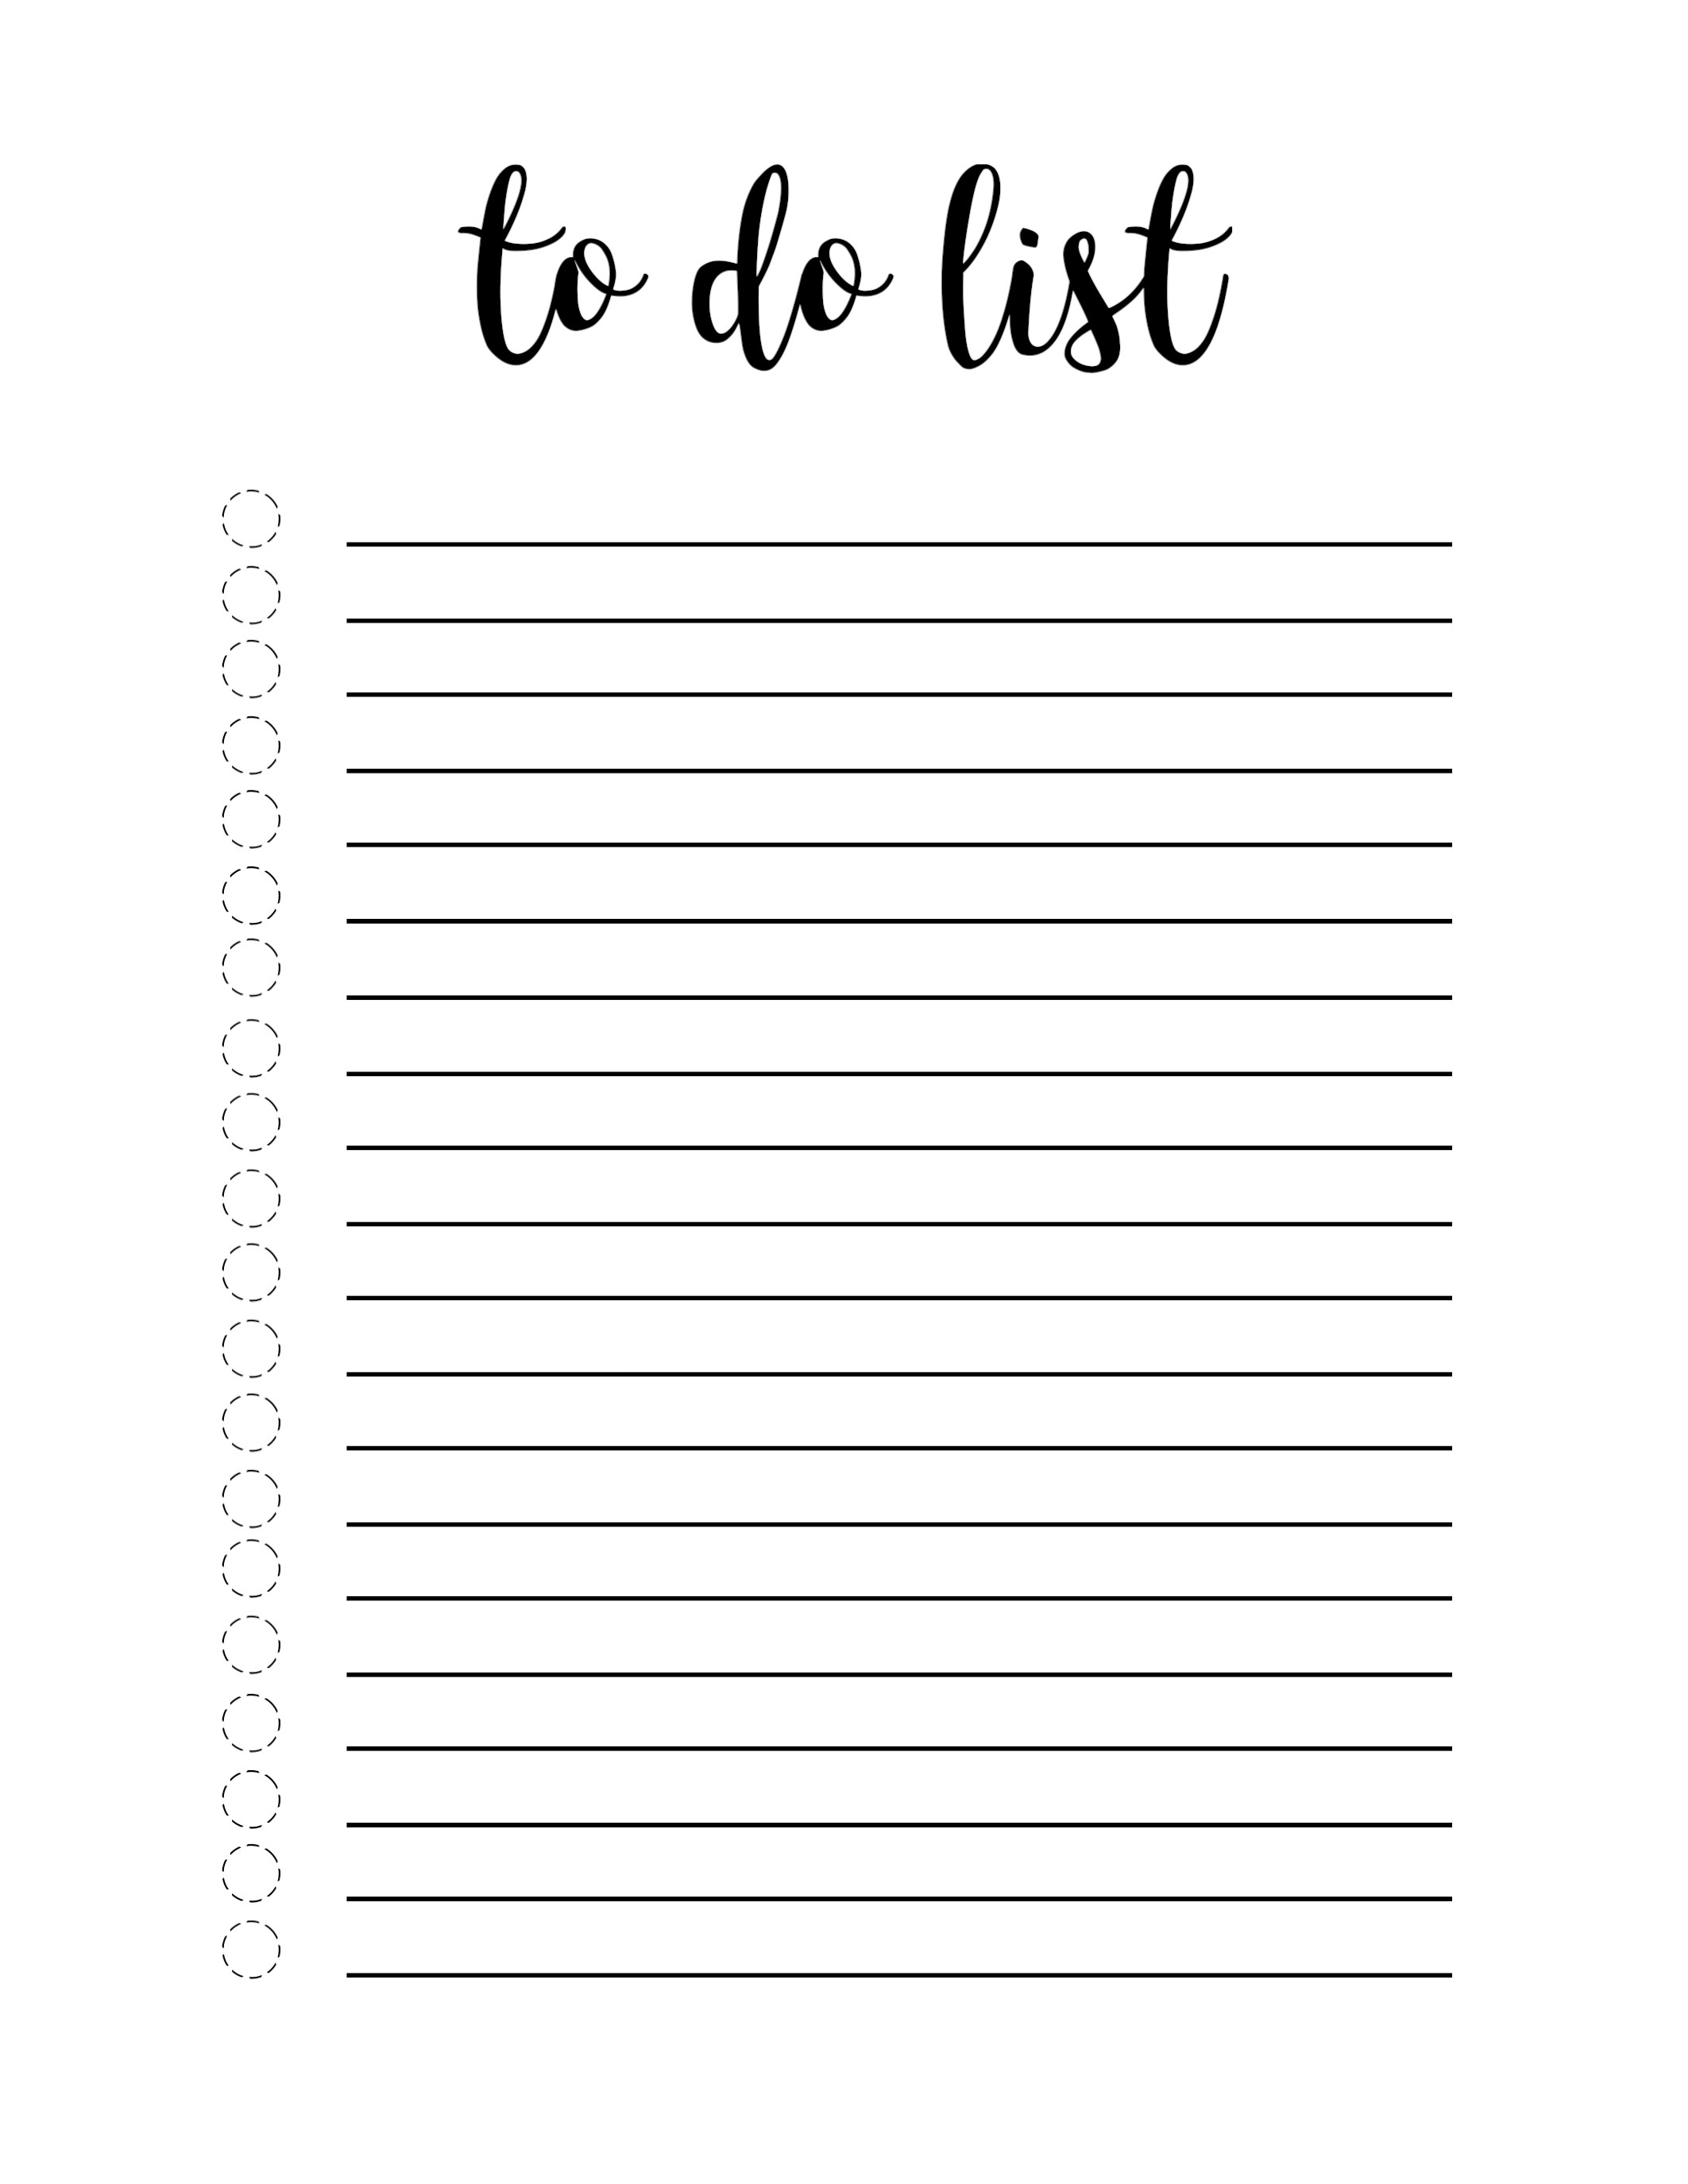 Printable To Do List | Room Surf - Free Printable To Do Lists To Get Organized